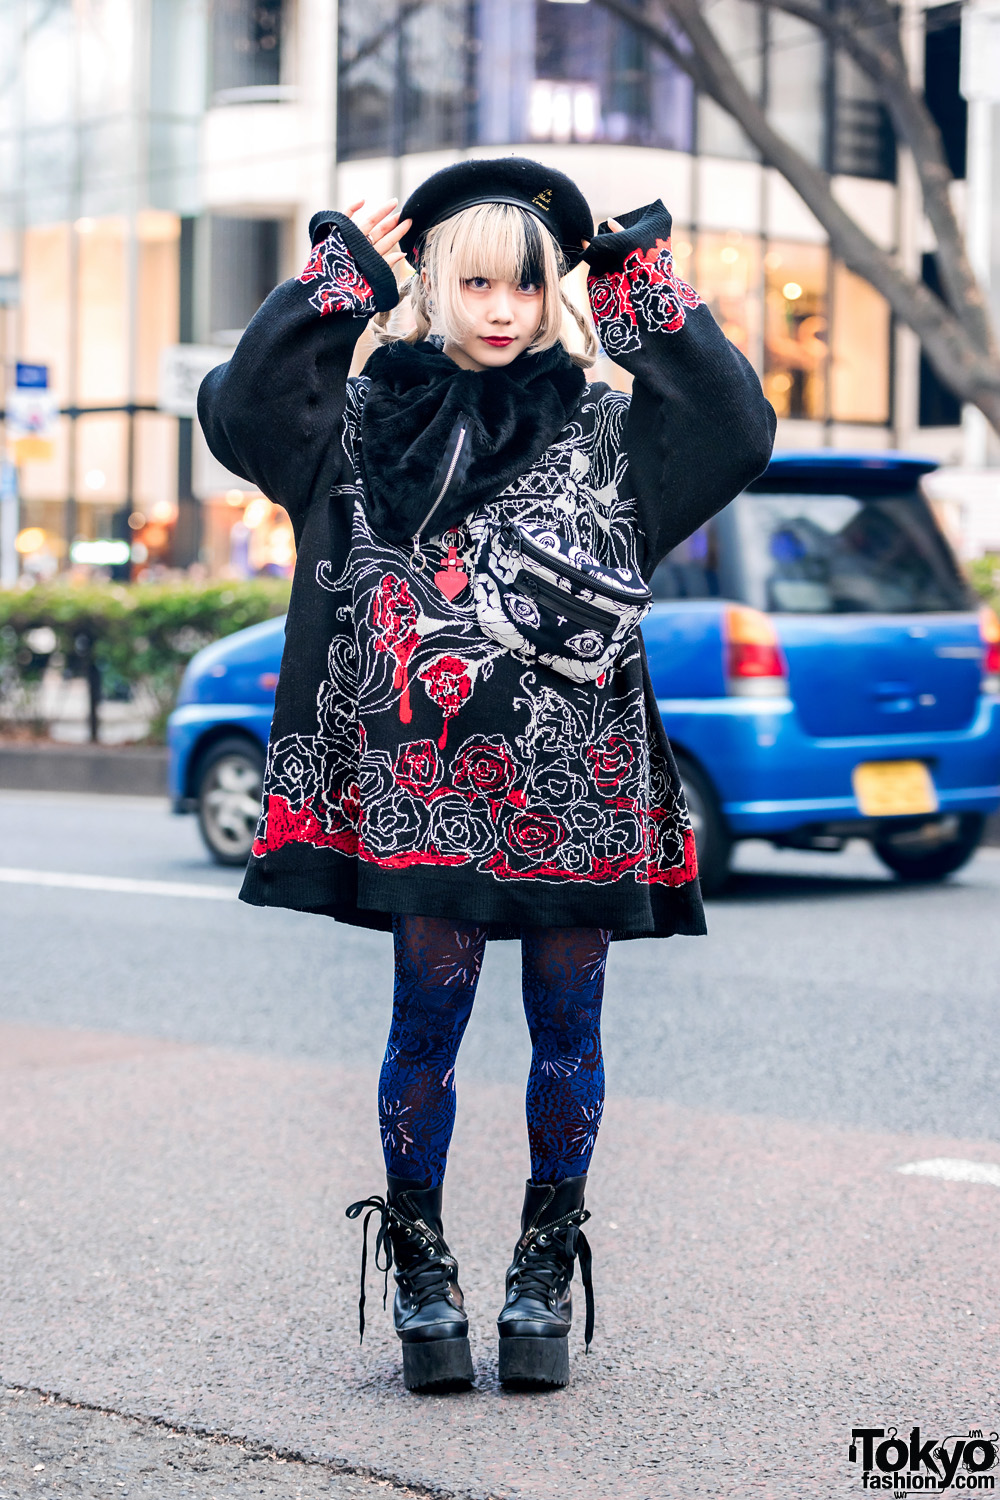 Japanese Pop Idol in Harajuku w/ Two-Tone Hair, Vampire Fangs